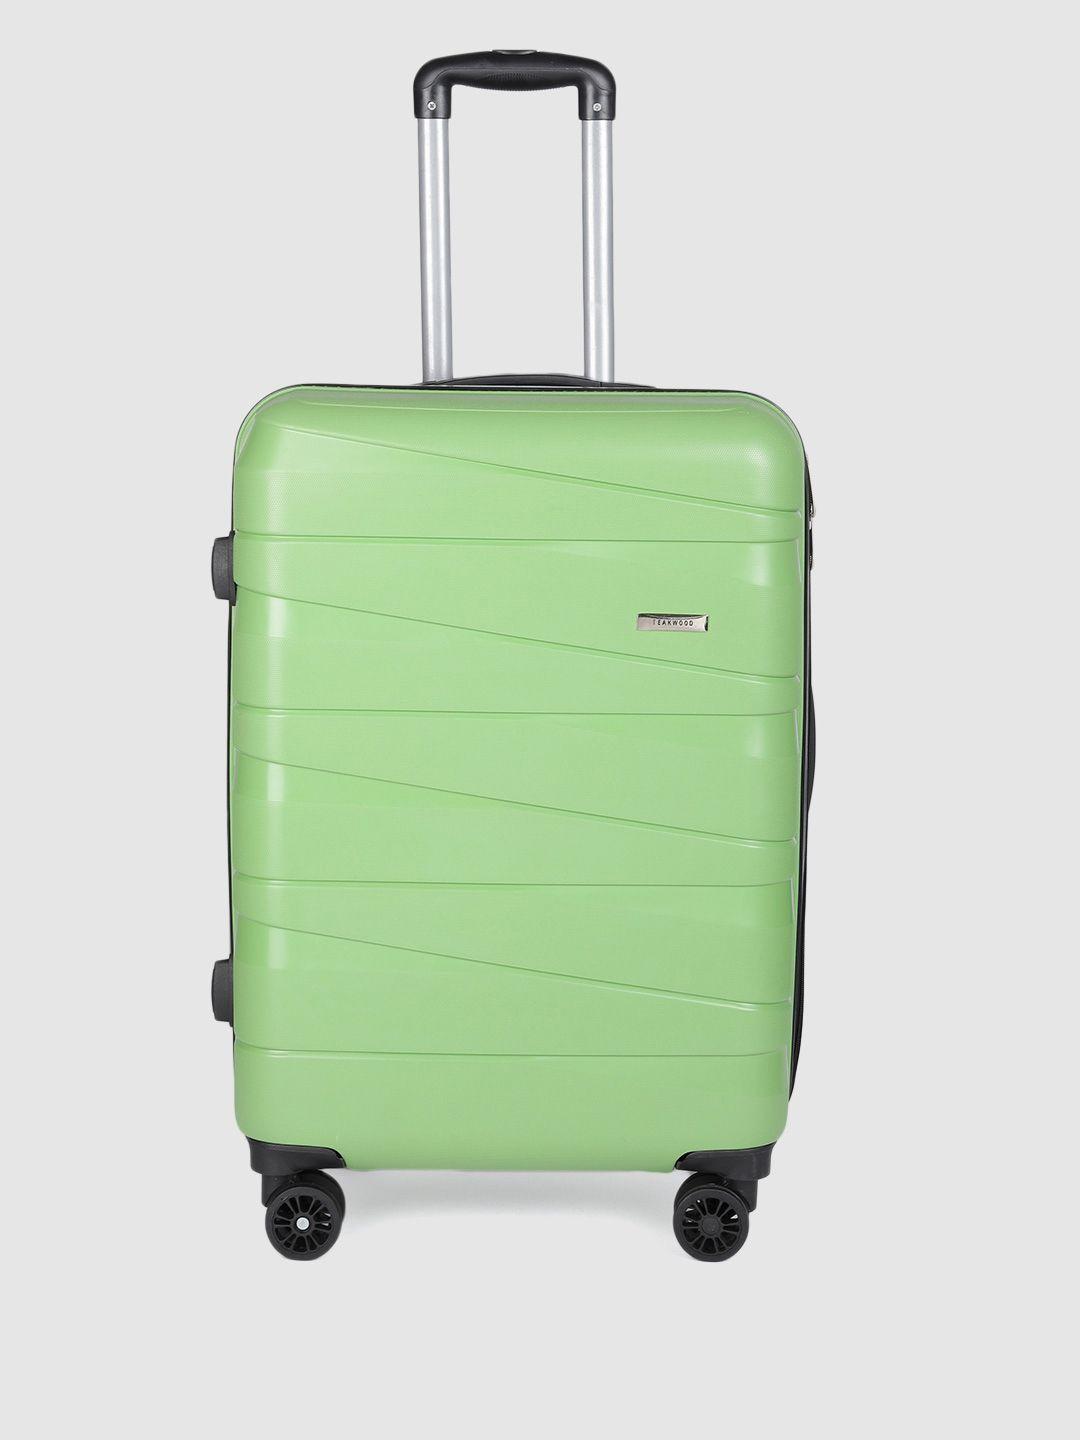 teakwood leathers mint green textured hard-sided medium suitcase trolley bag 66.3 l